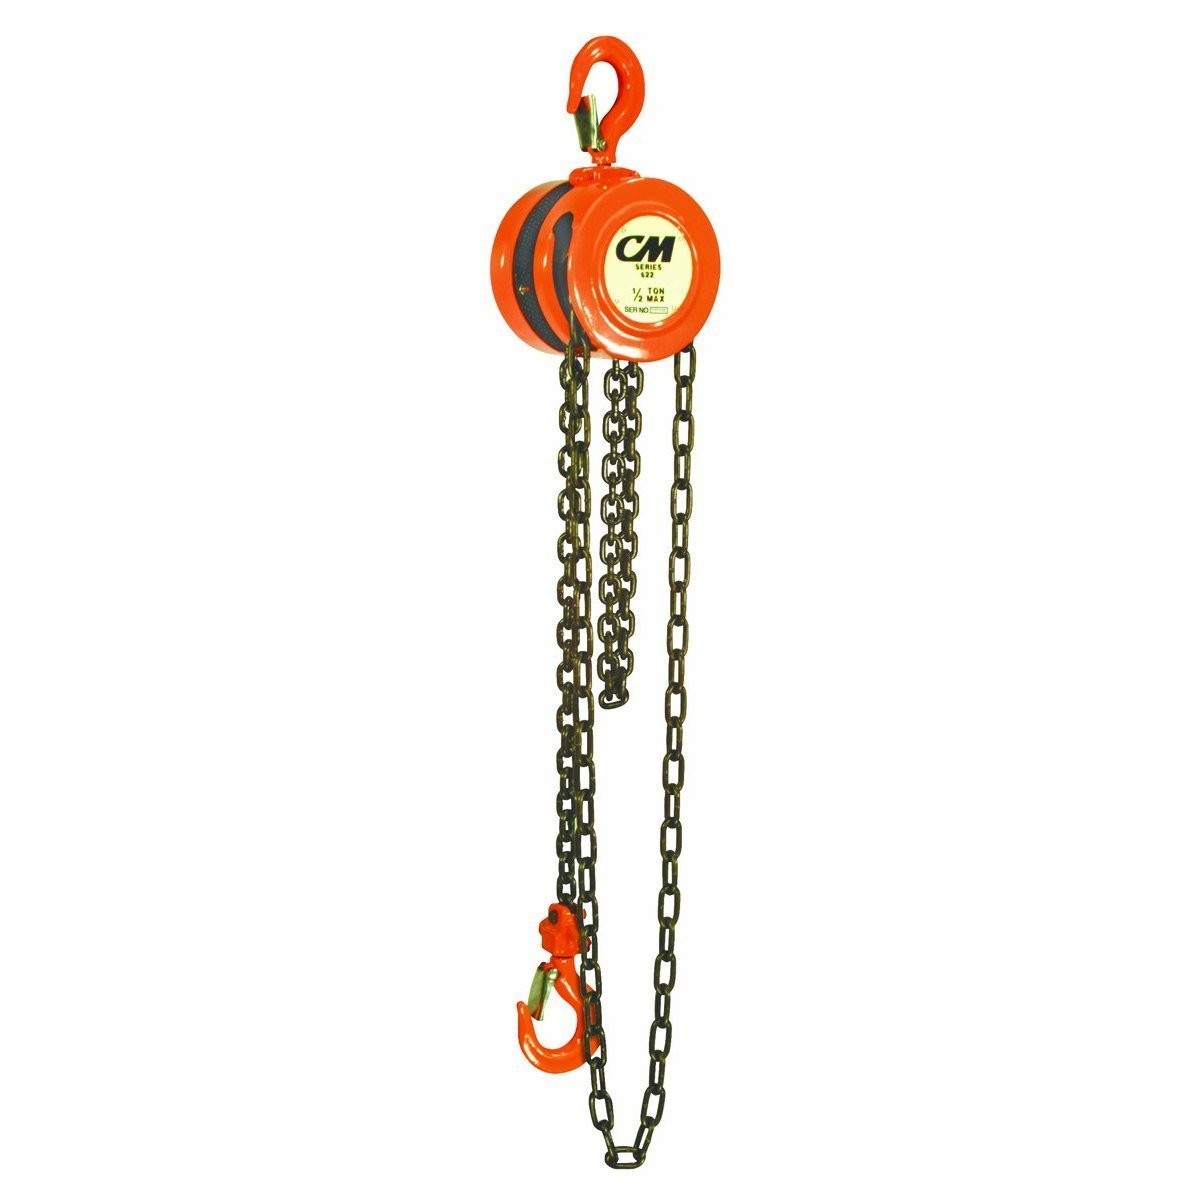 CM - Series 622 1 Ton Hand Chain Hoist (15' Lift)